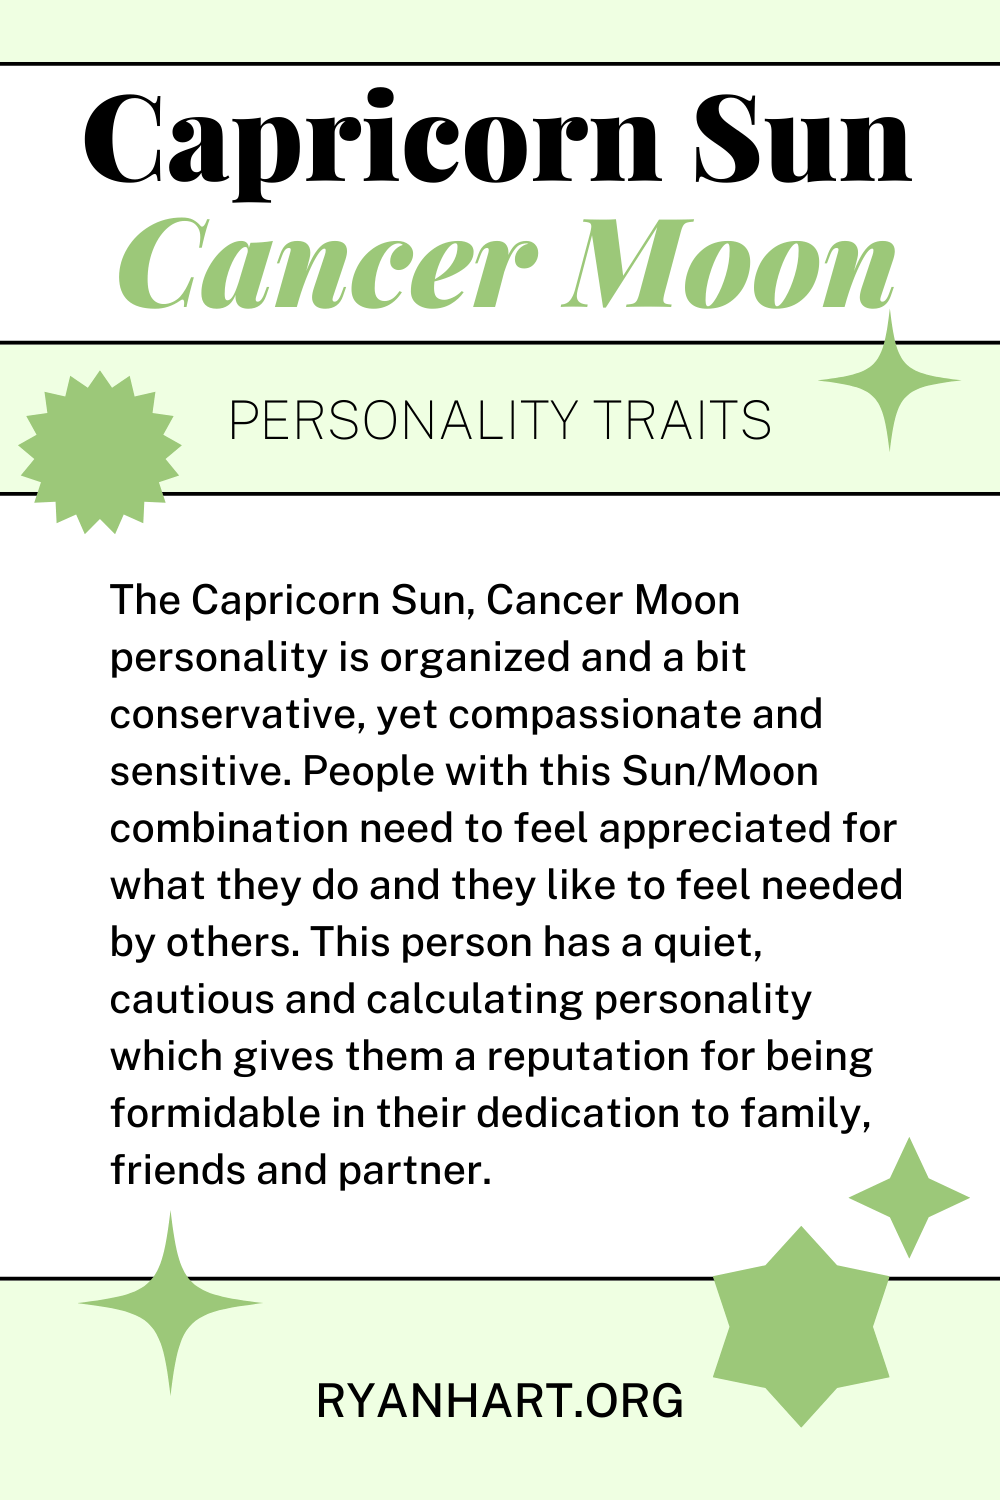 Capricorn Sun Cancer Moon Description